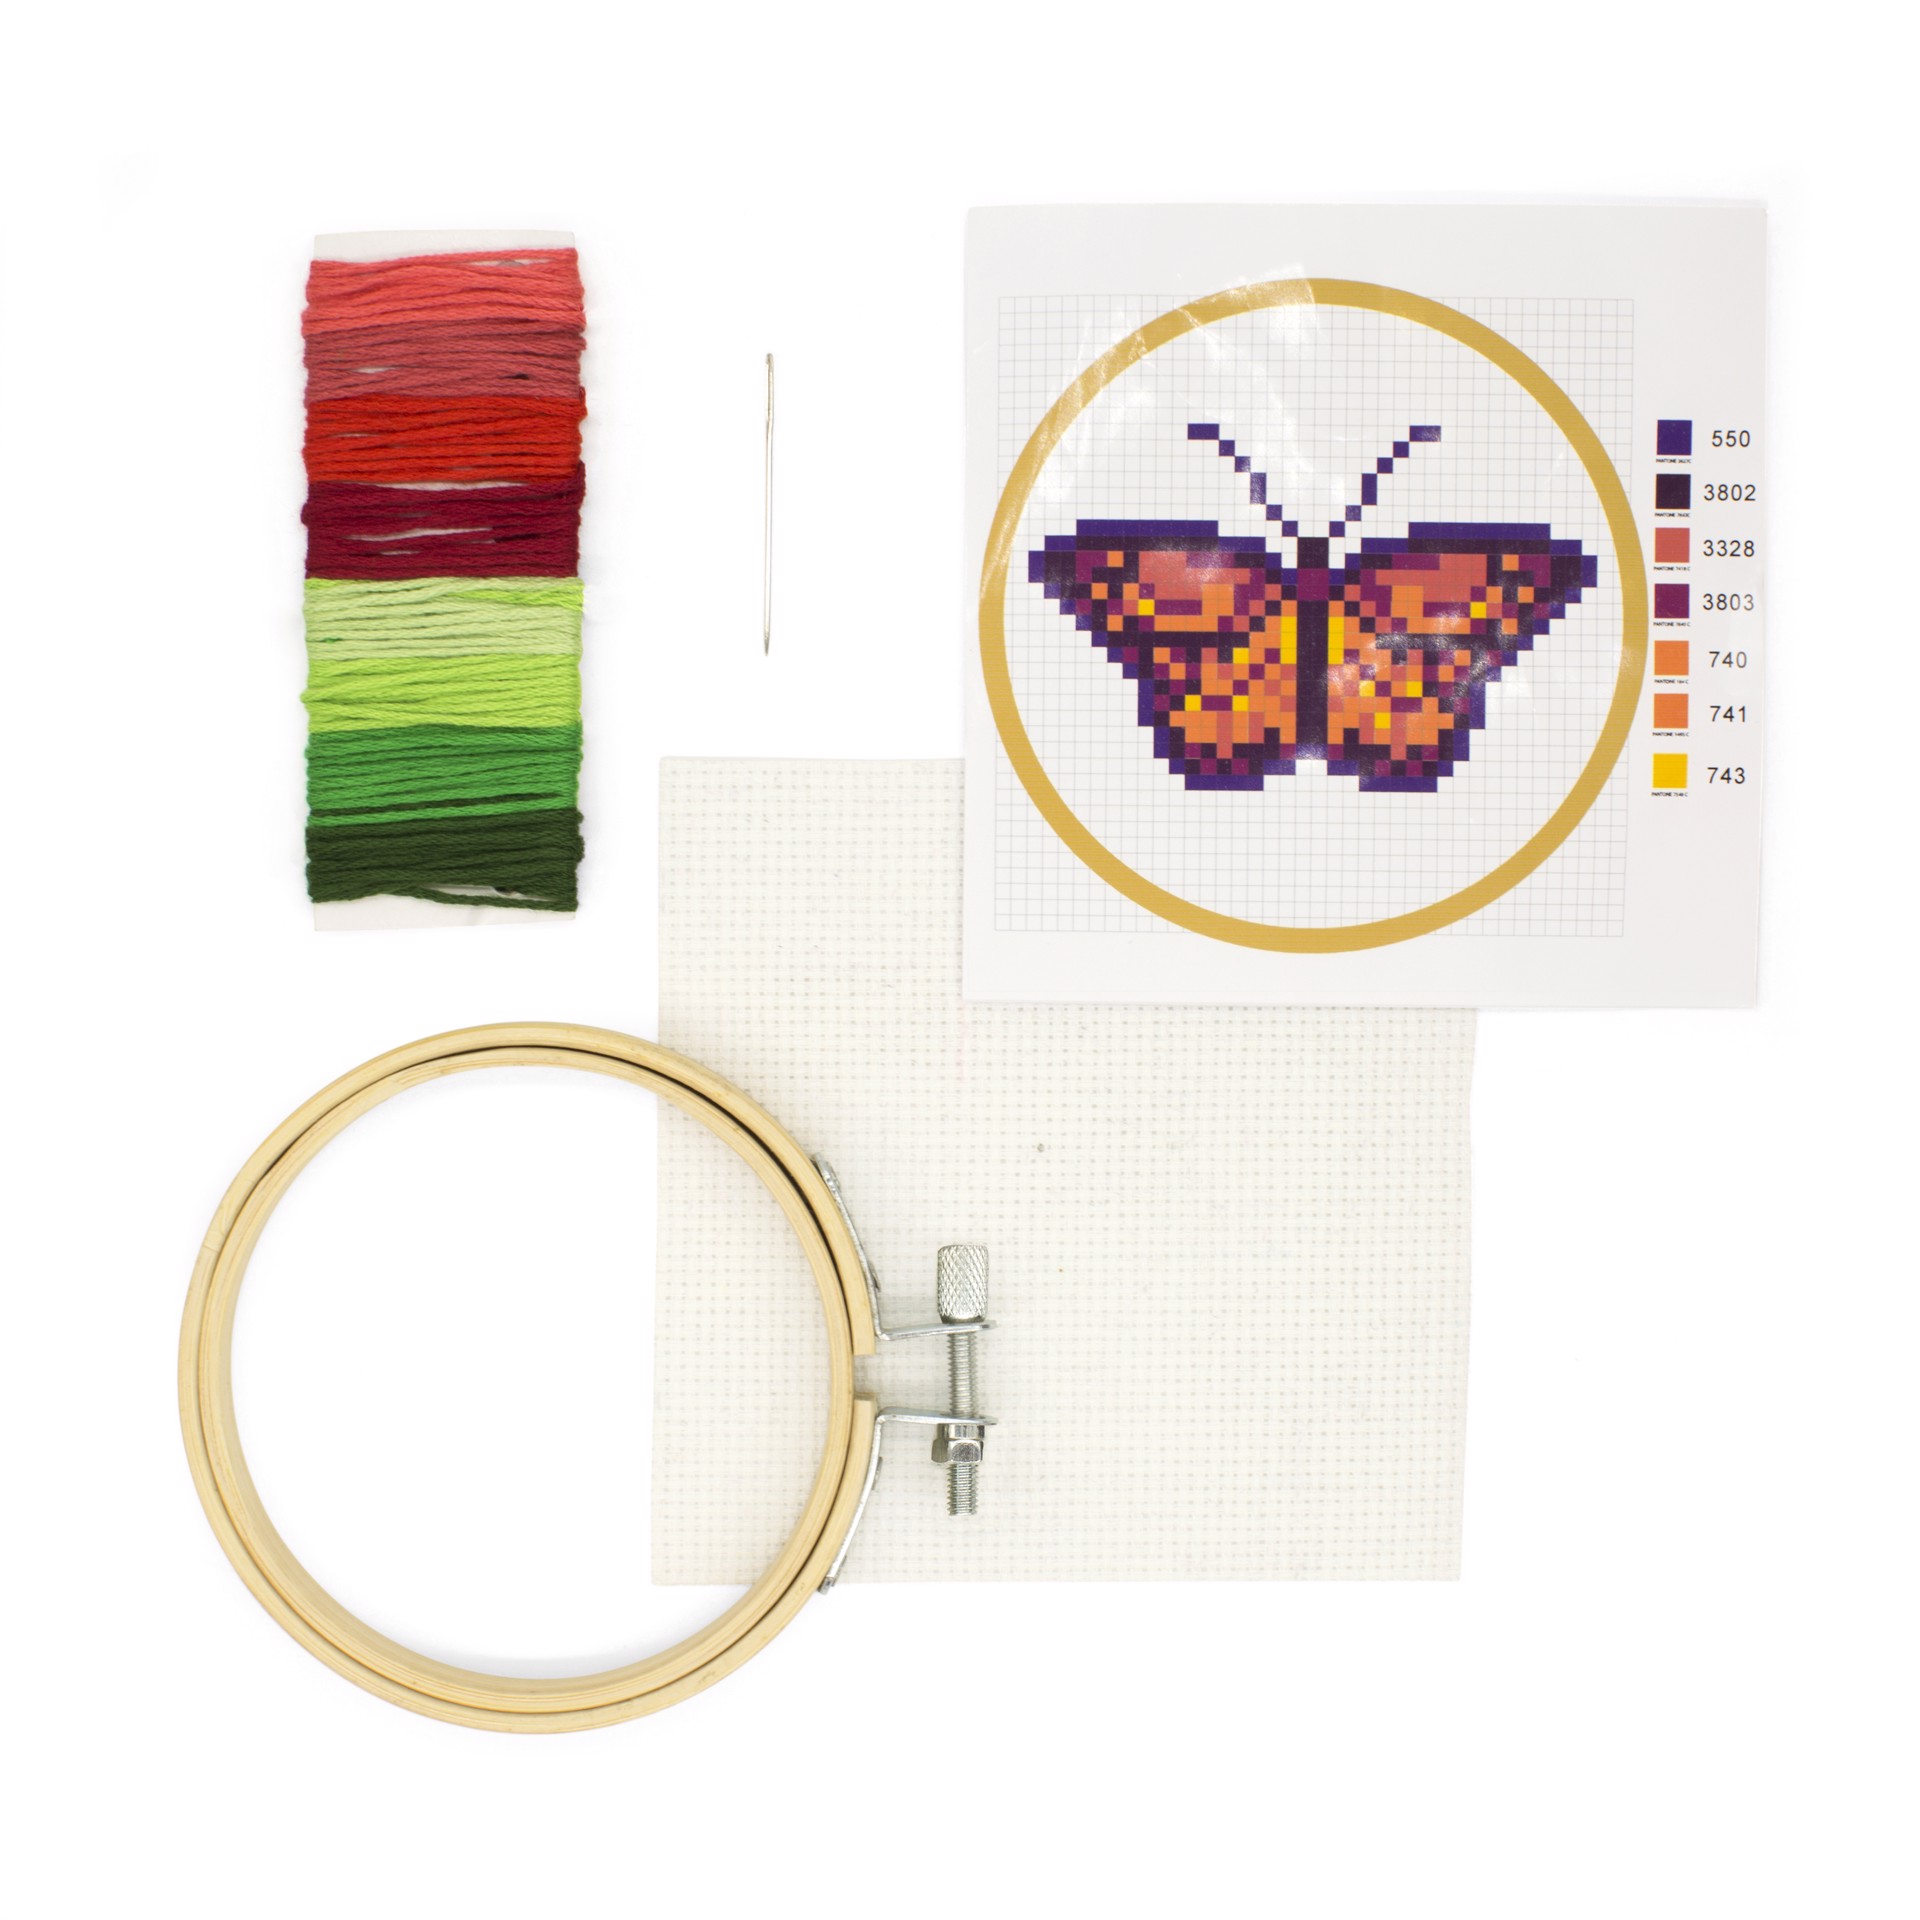 Mini Cross Stitch Kit - Butterfly by Chauvet Arts